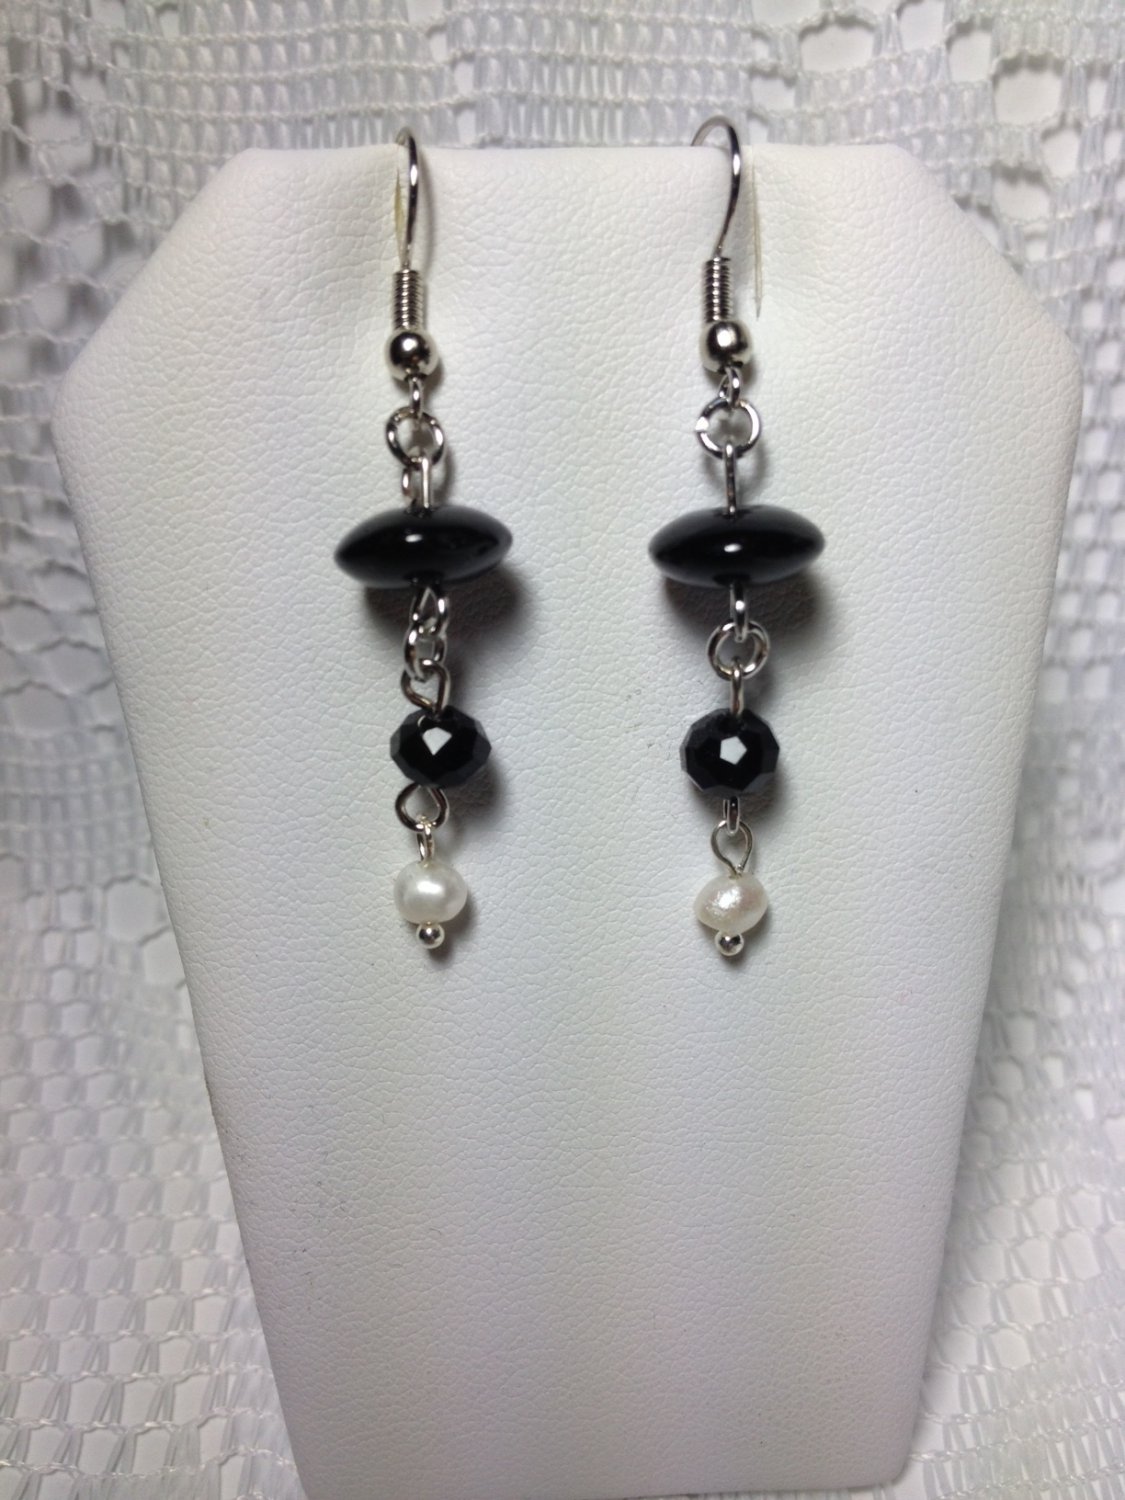 Handmade French Hook Earrings Jewelry Pearls Capped in Black Earrings ...